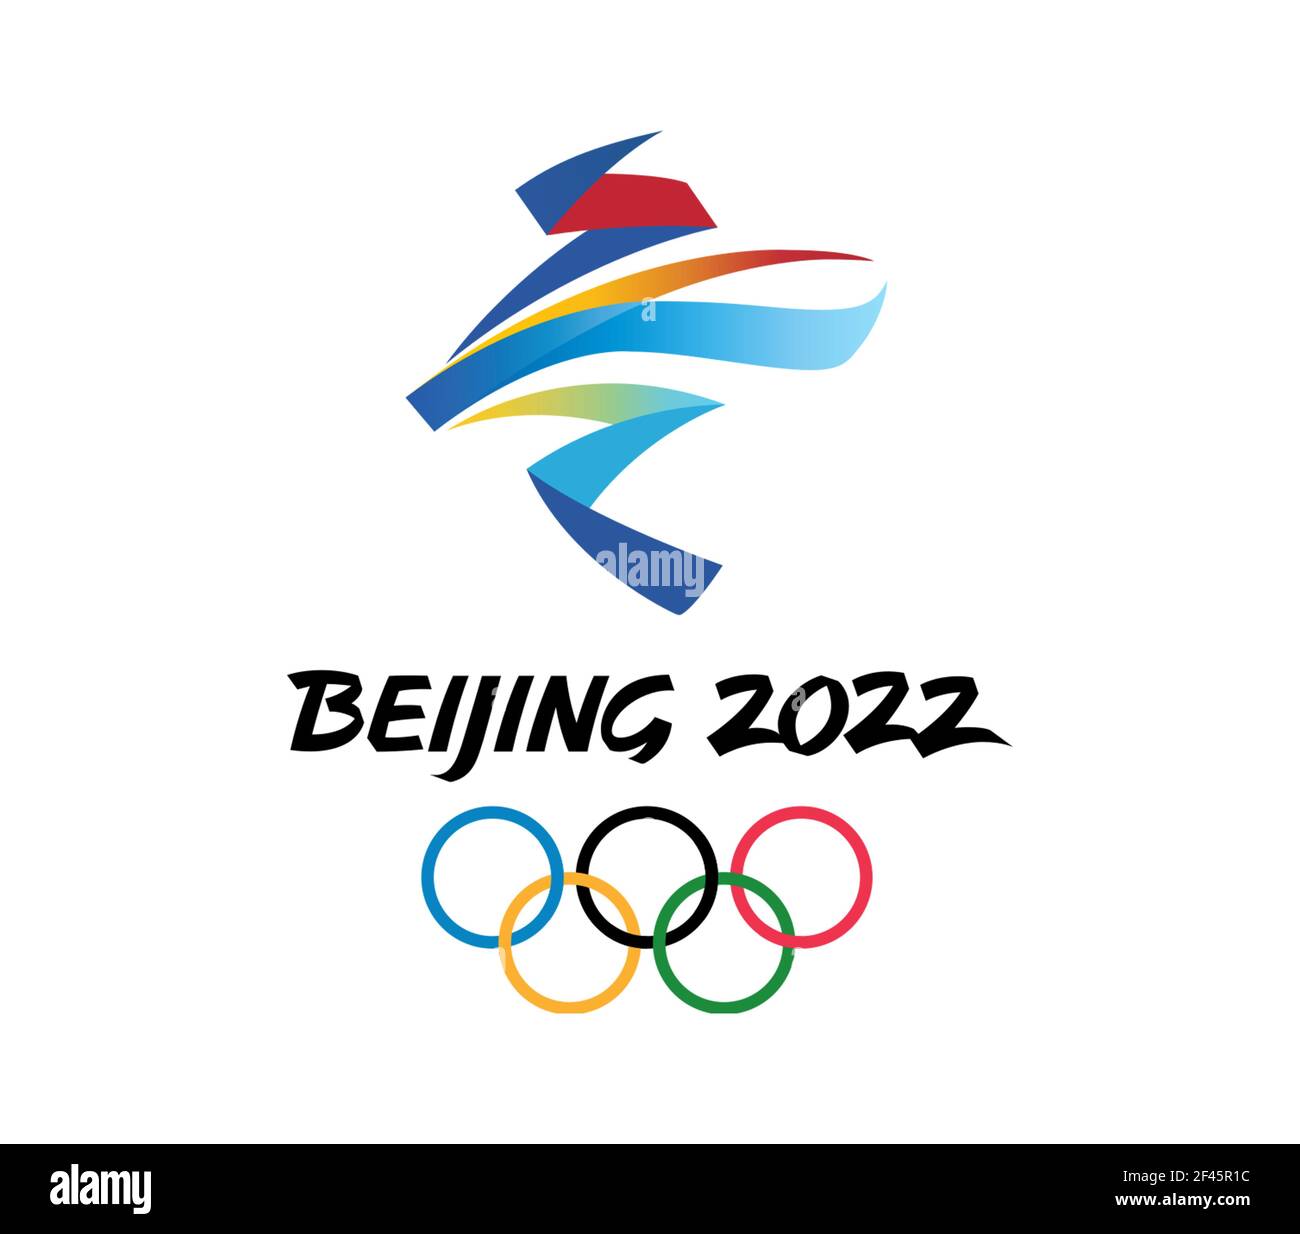 Pekín 2022 Foto de stock